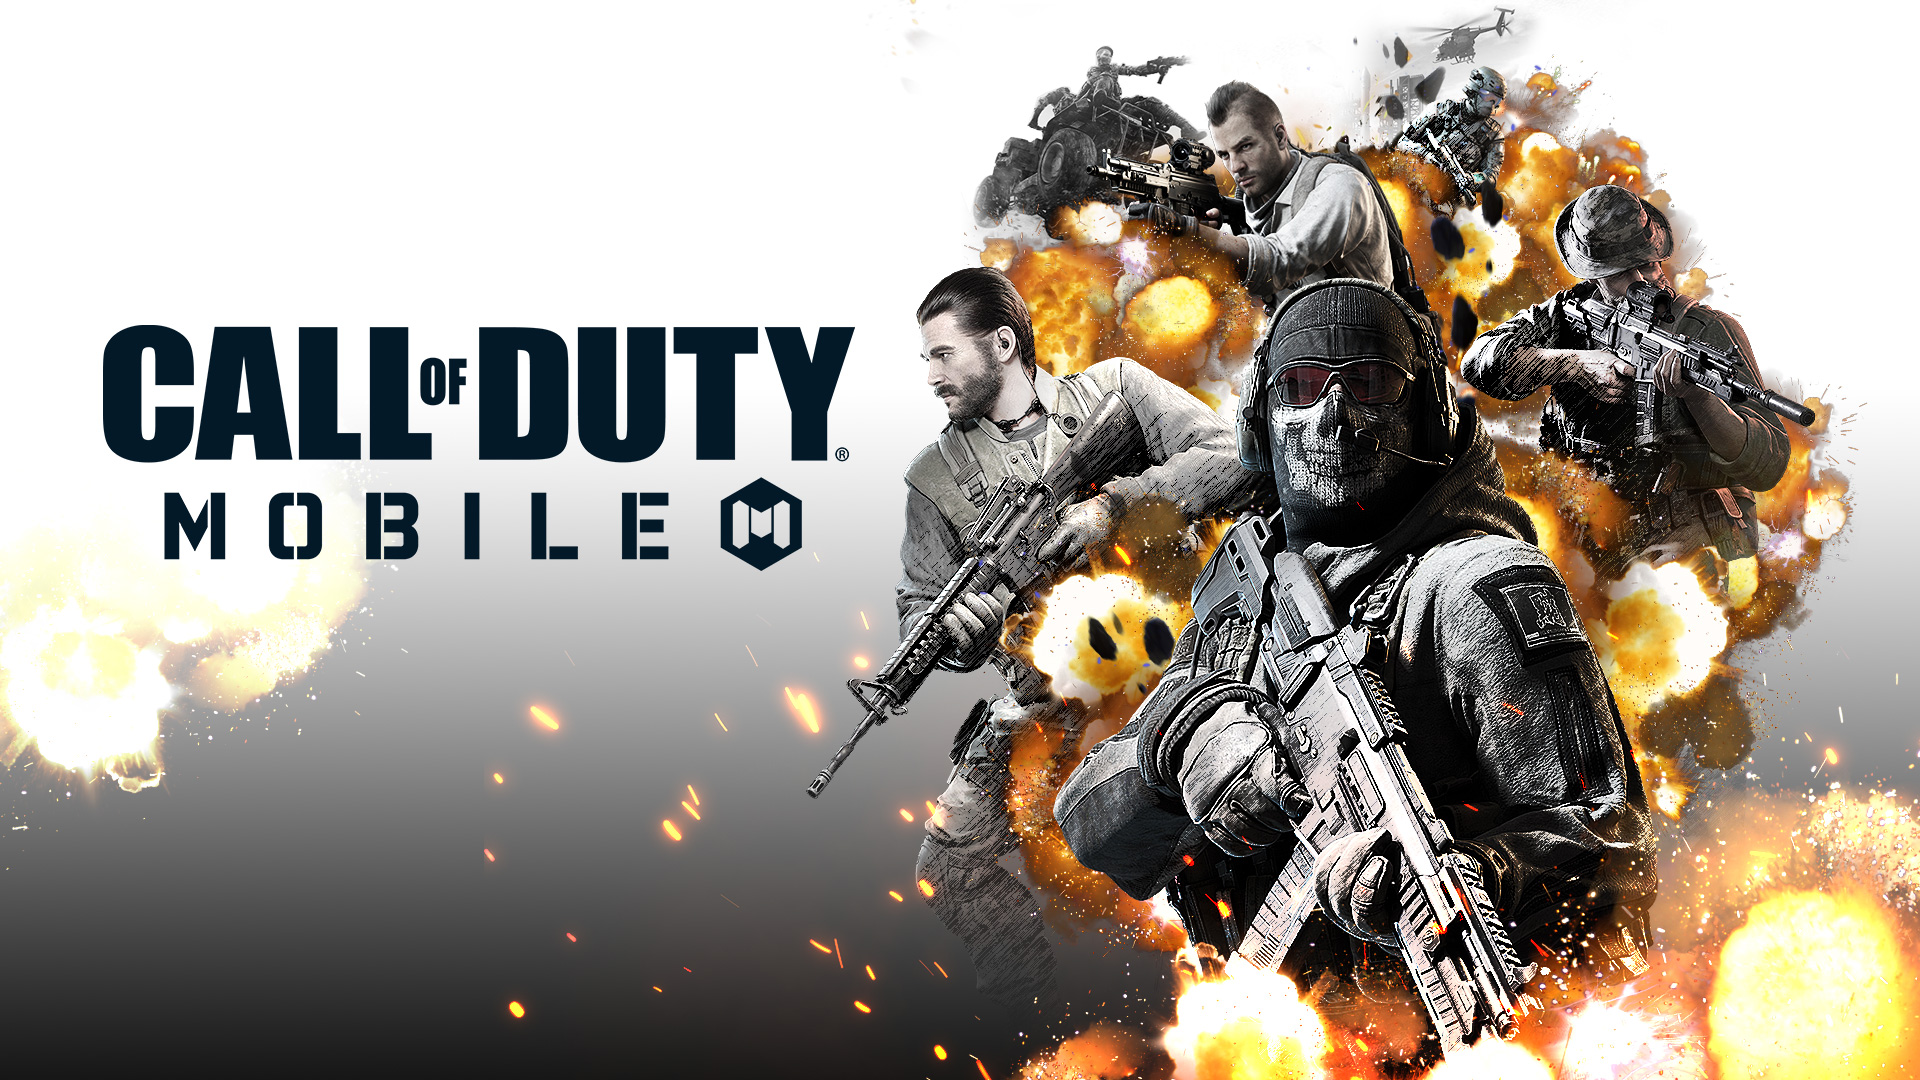 Call of Duty Mobile มียอดดาวน์โหลดไปมากกว่า 650 ล้านครั้งแล้ว